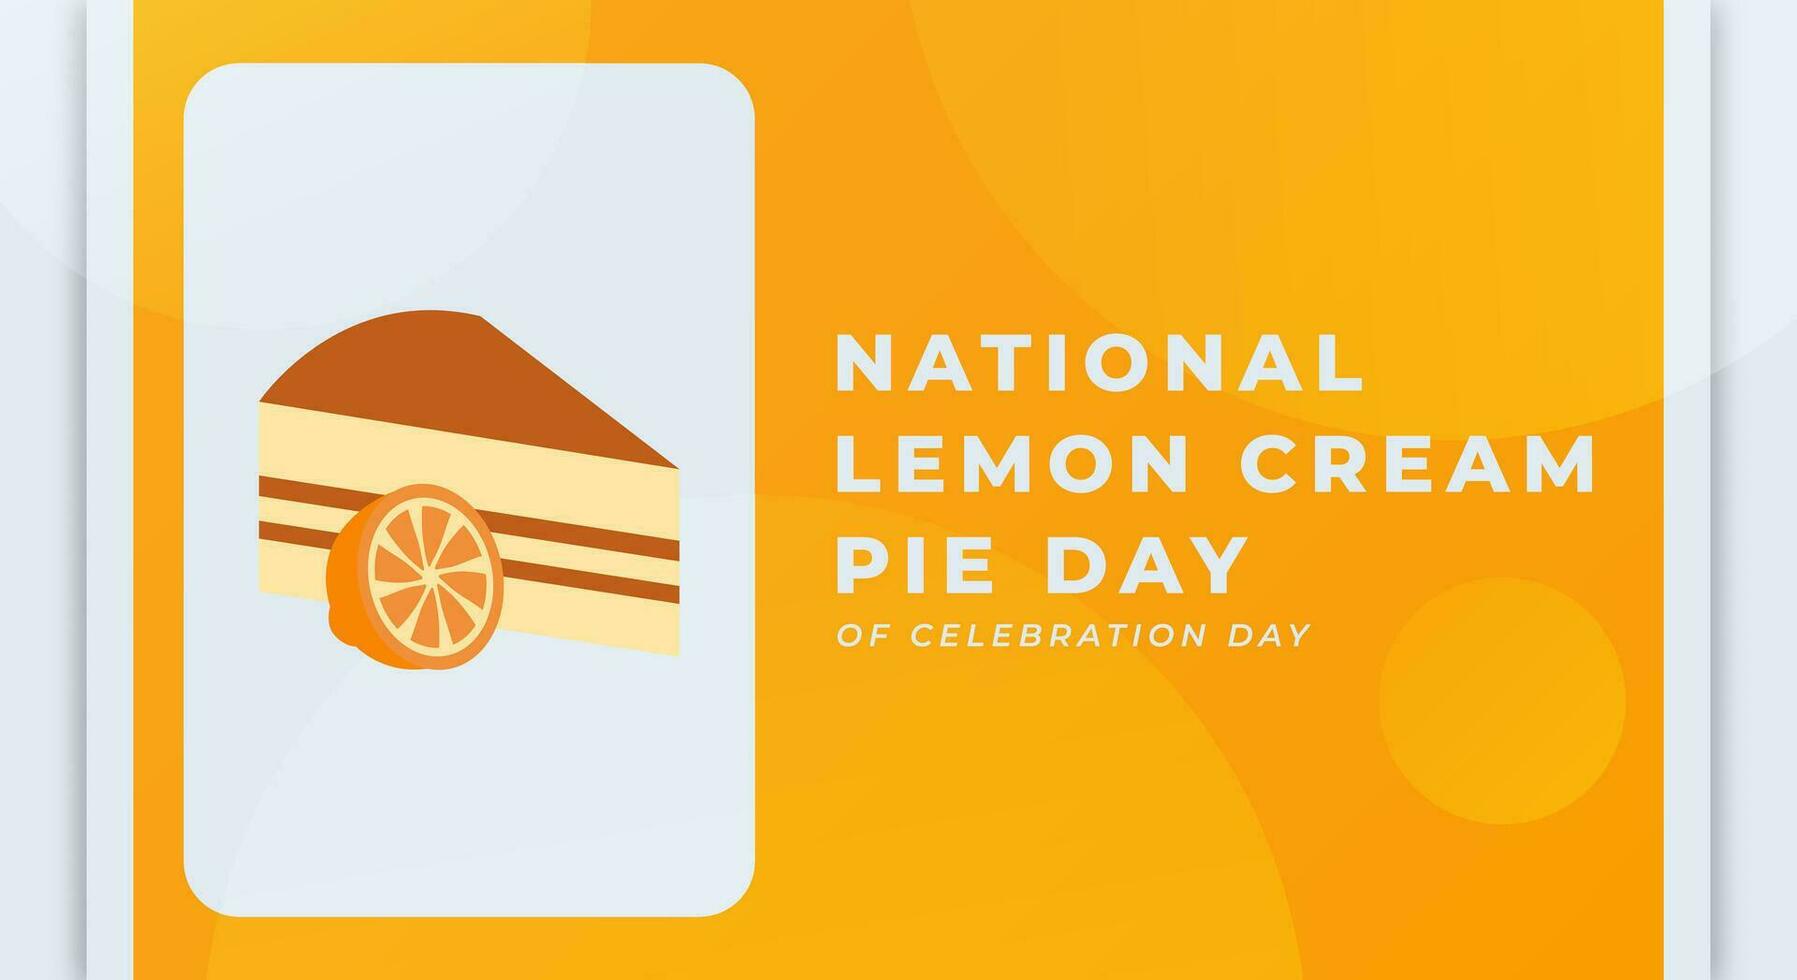 National Lemon Cream Pie Day Celebration Vector Design Illustration for Background, Poster, Banner, Advertising, Greeting Card